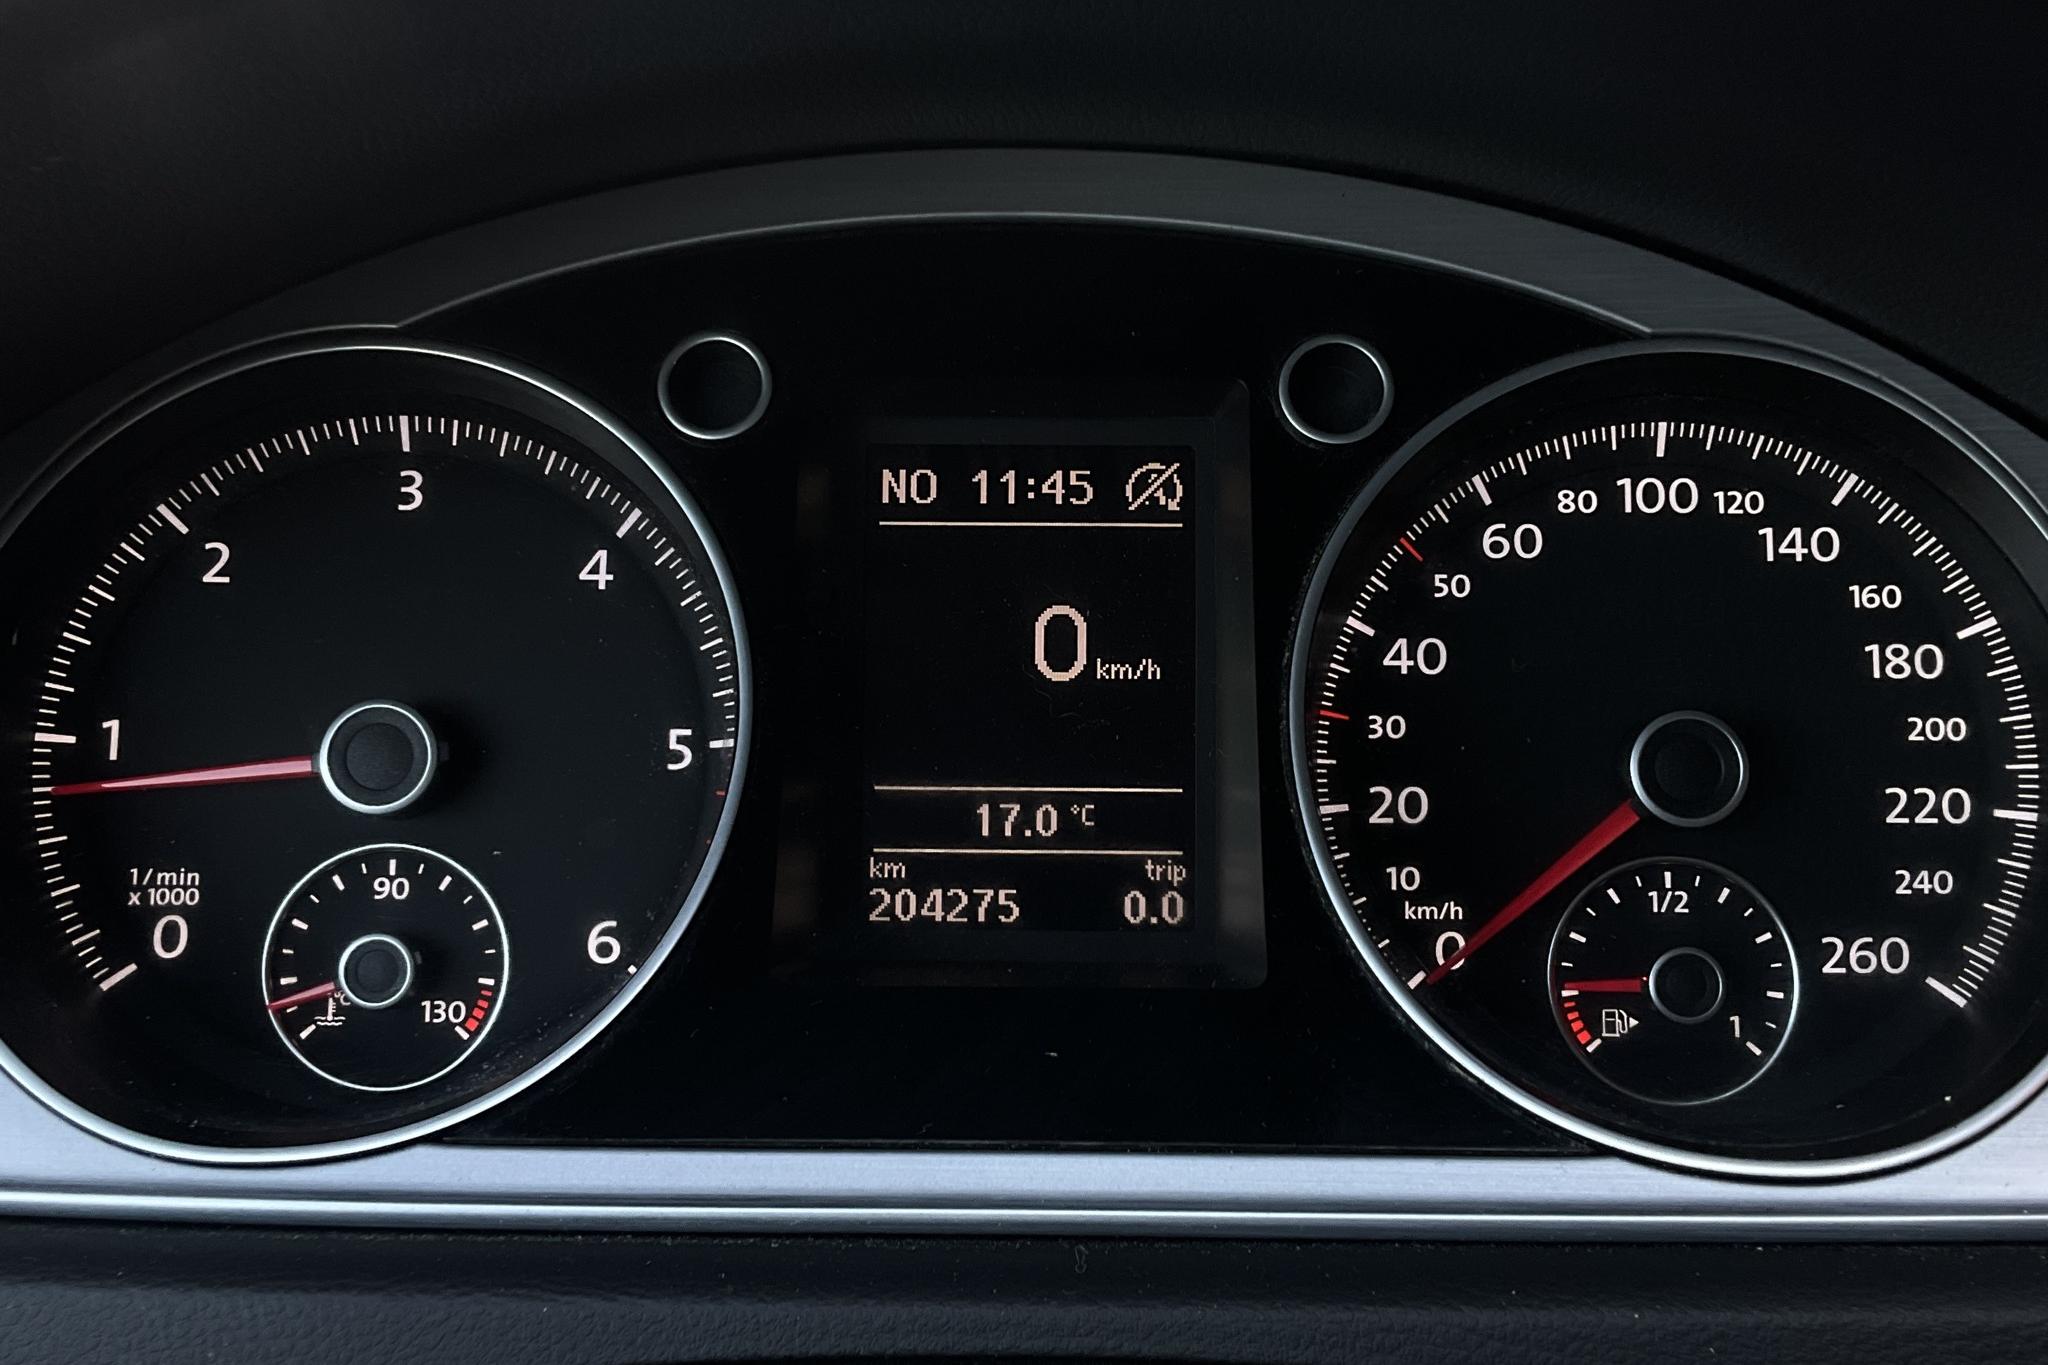 VW Passat Alltrack 2.0 TDI BlueMotion Technology 4Motion (177hk) - 204 280 km - Automatic - red - 2015